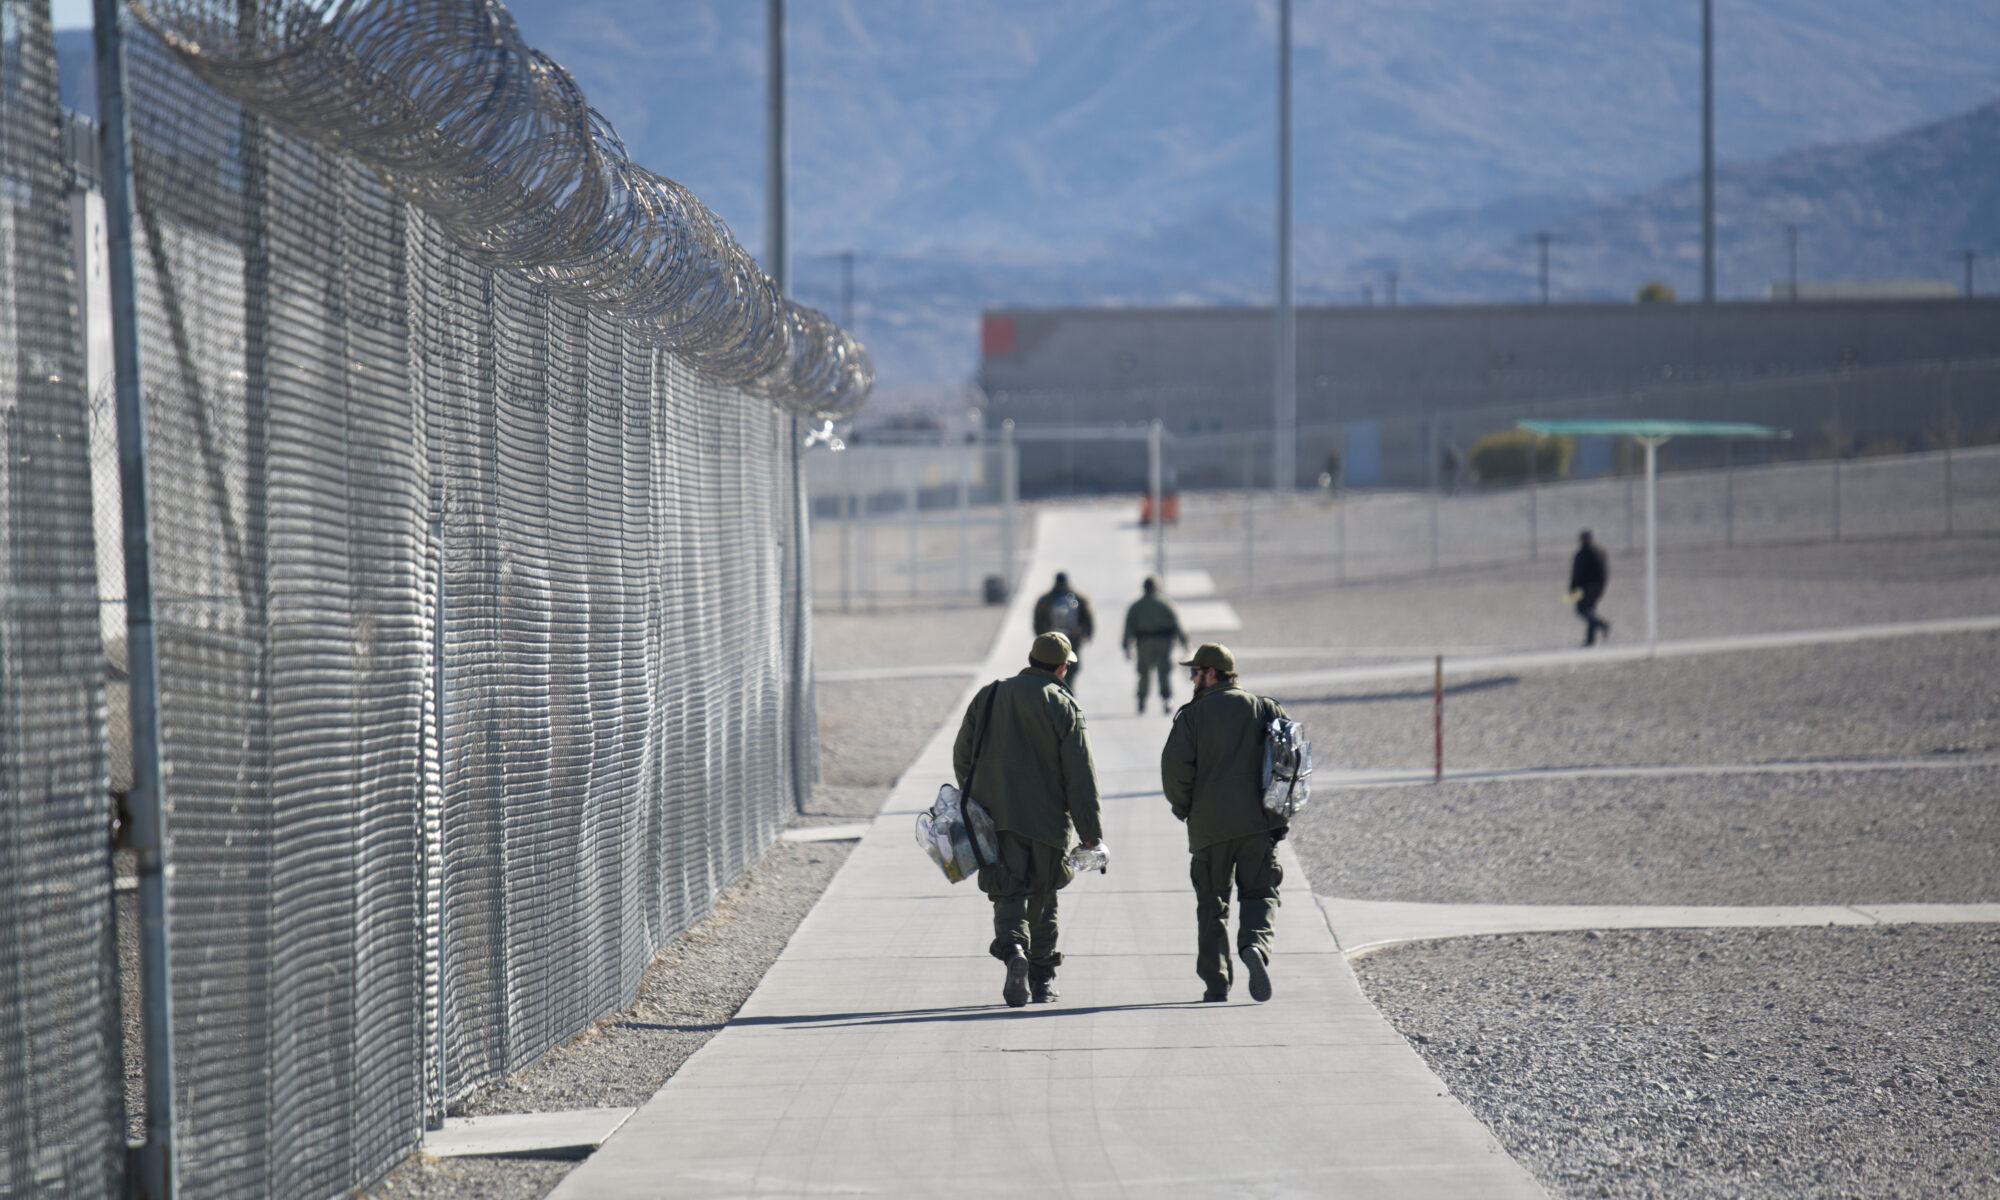 desert prisons correctional prisoners lawmakers medicaid divides enrolling officials noticieromovil